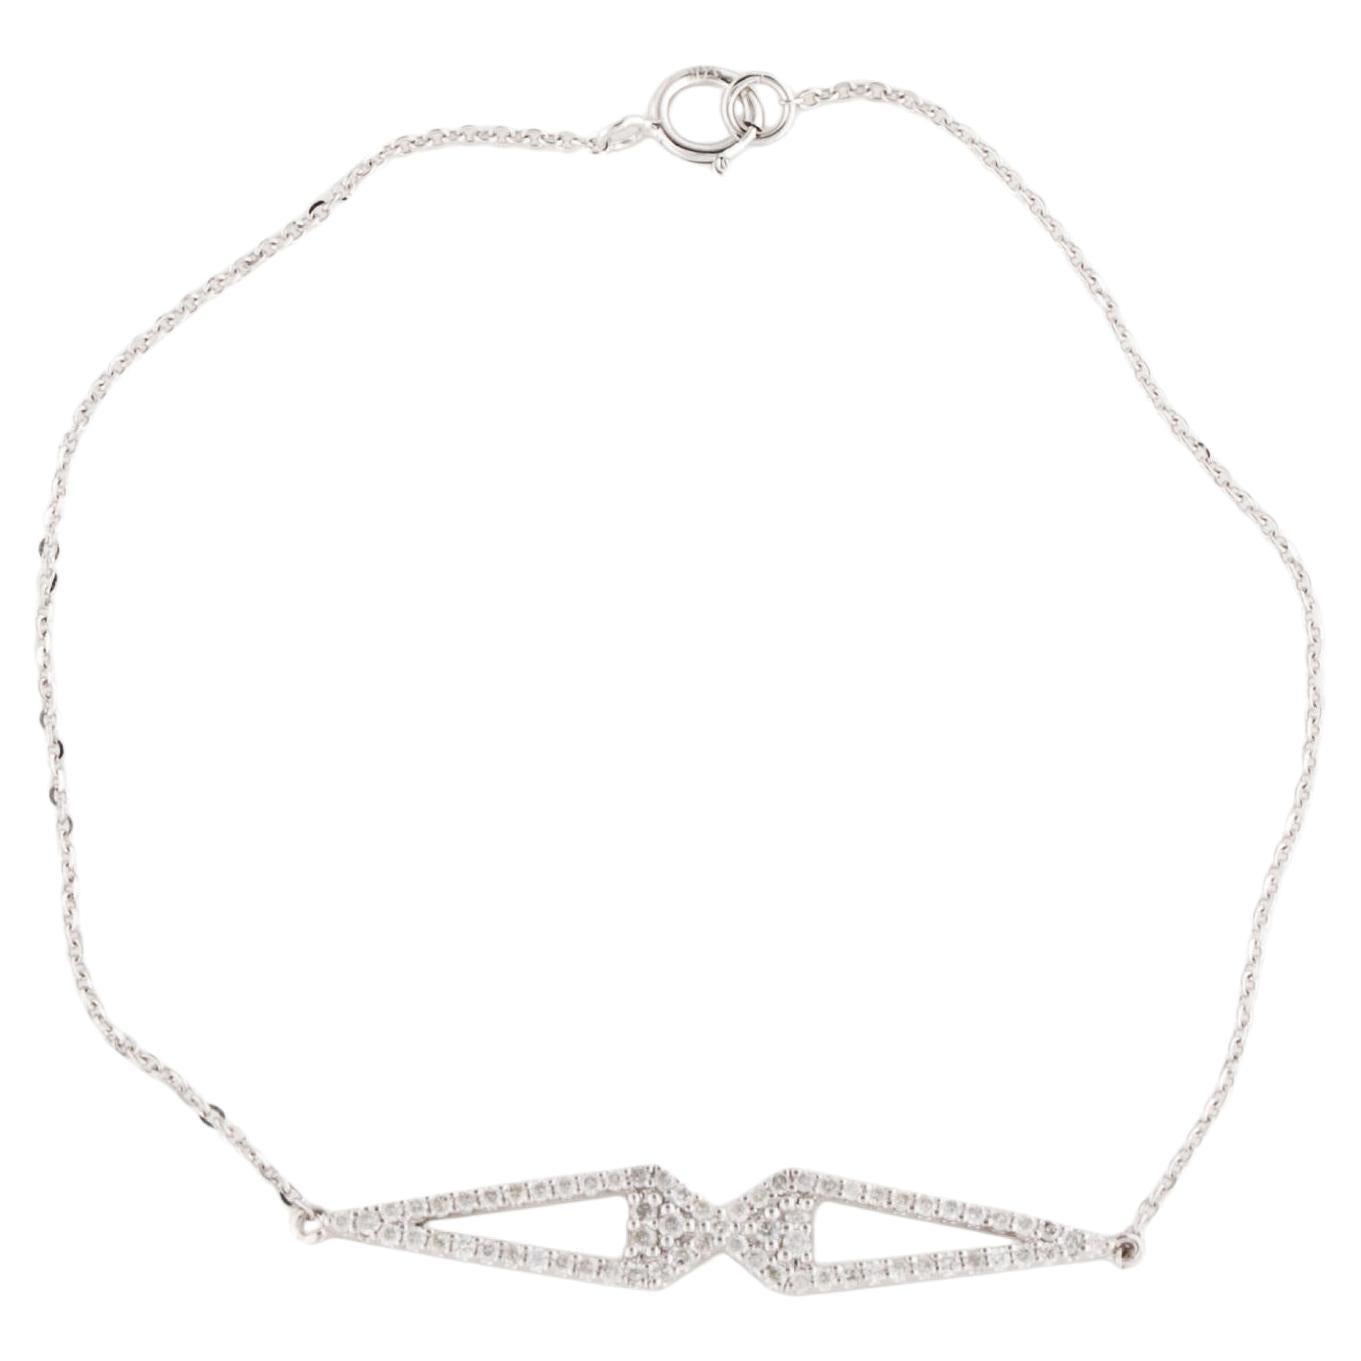 14K Diamond Link Bracelet - Sparkling Elegance, Timeless Glamour, Luxury Design